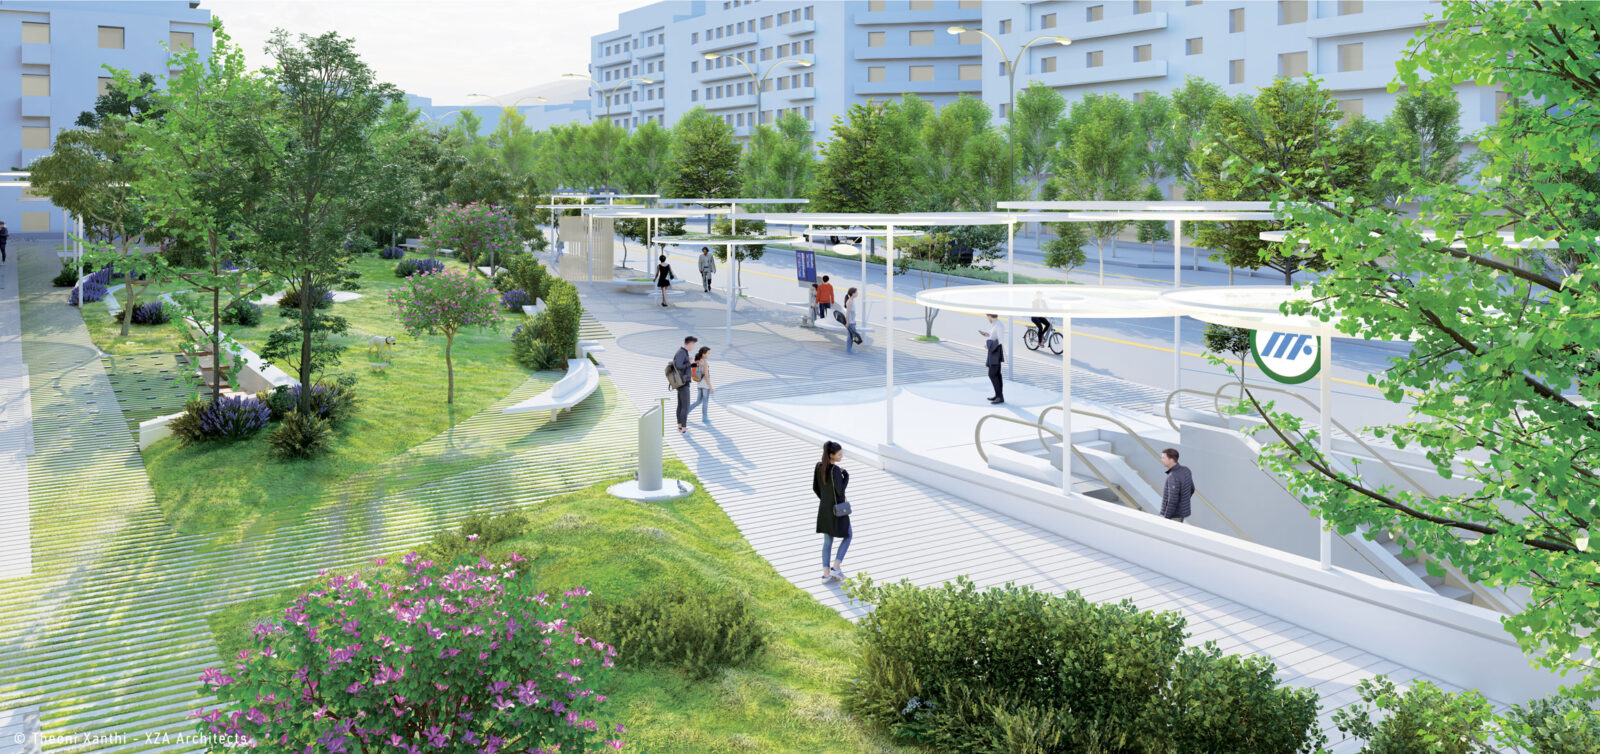 Archisearch Α' Βραβείο στον Αρχιτεκτονικό Διαγωνισμό Ιδεών για την ανάπλαση του κοινόχρηστου χώρου και της ευρύτερης περιοχής του Νέου Σταθμού Μετρό Αλεξάνδρας | Theoni Xanthi – XZA Architects